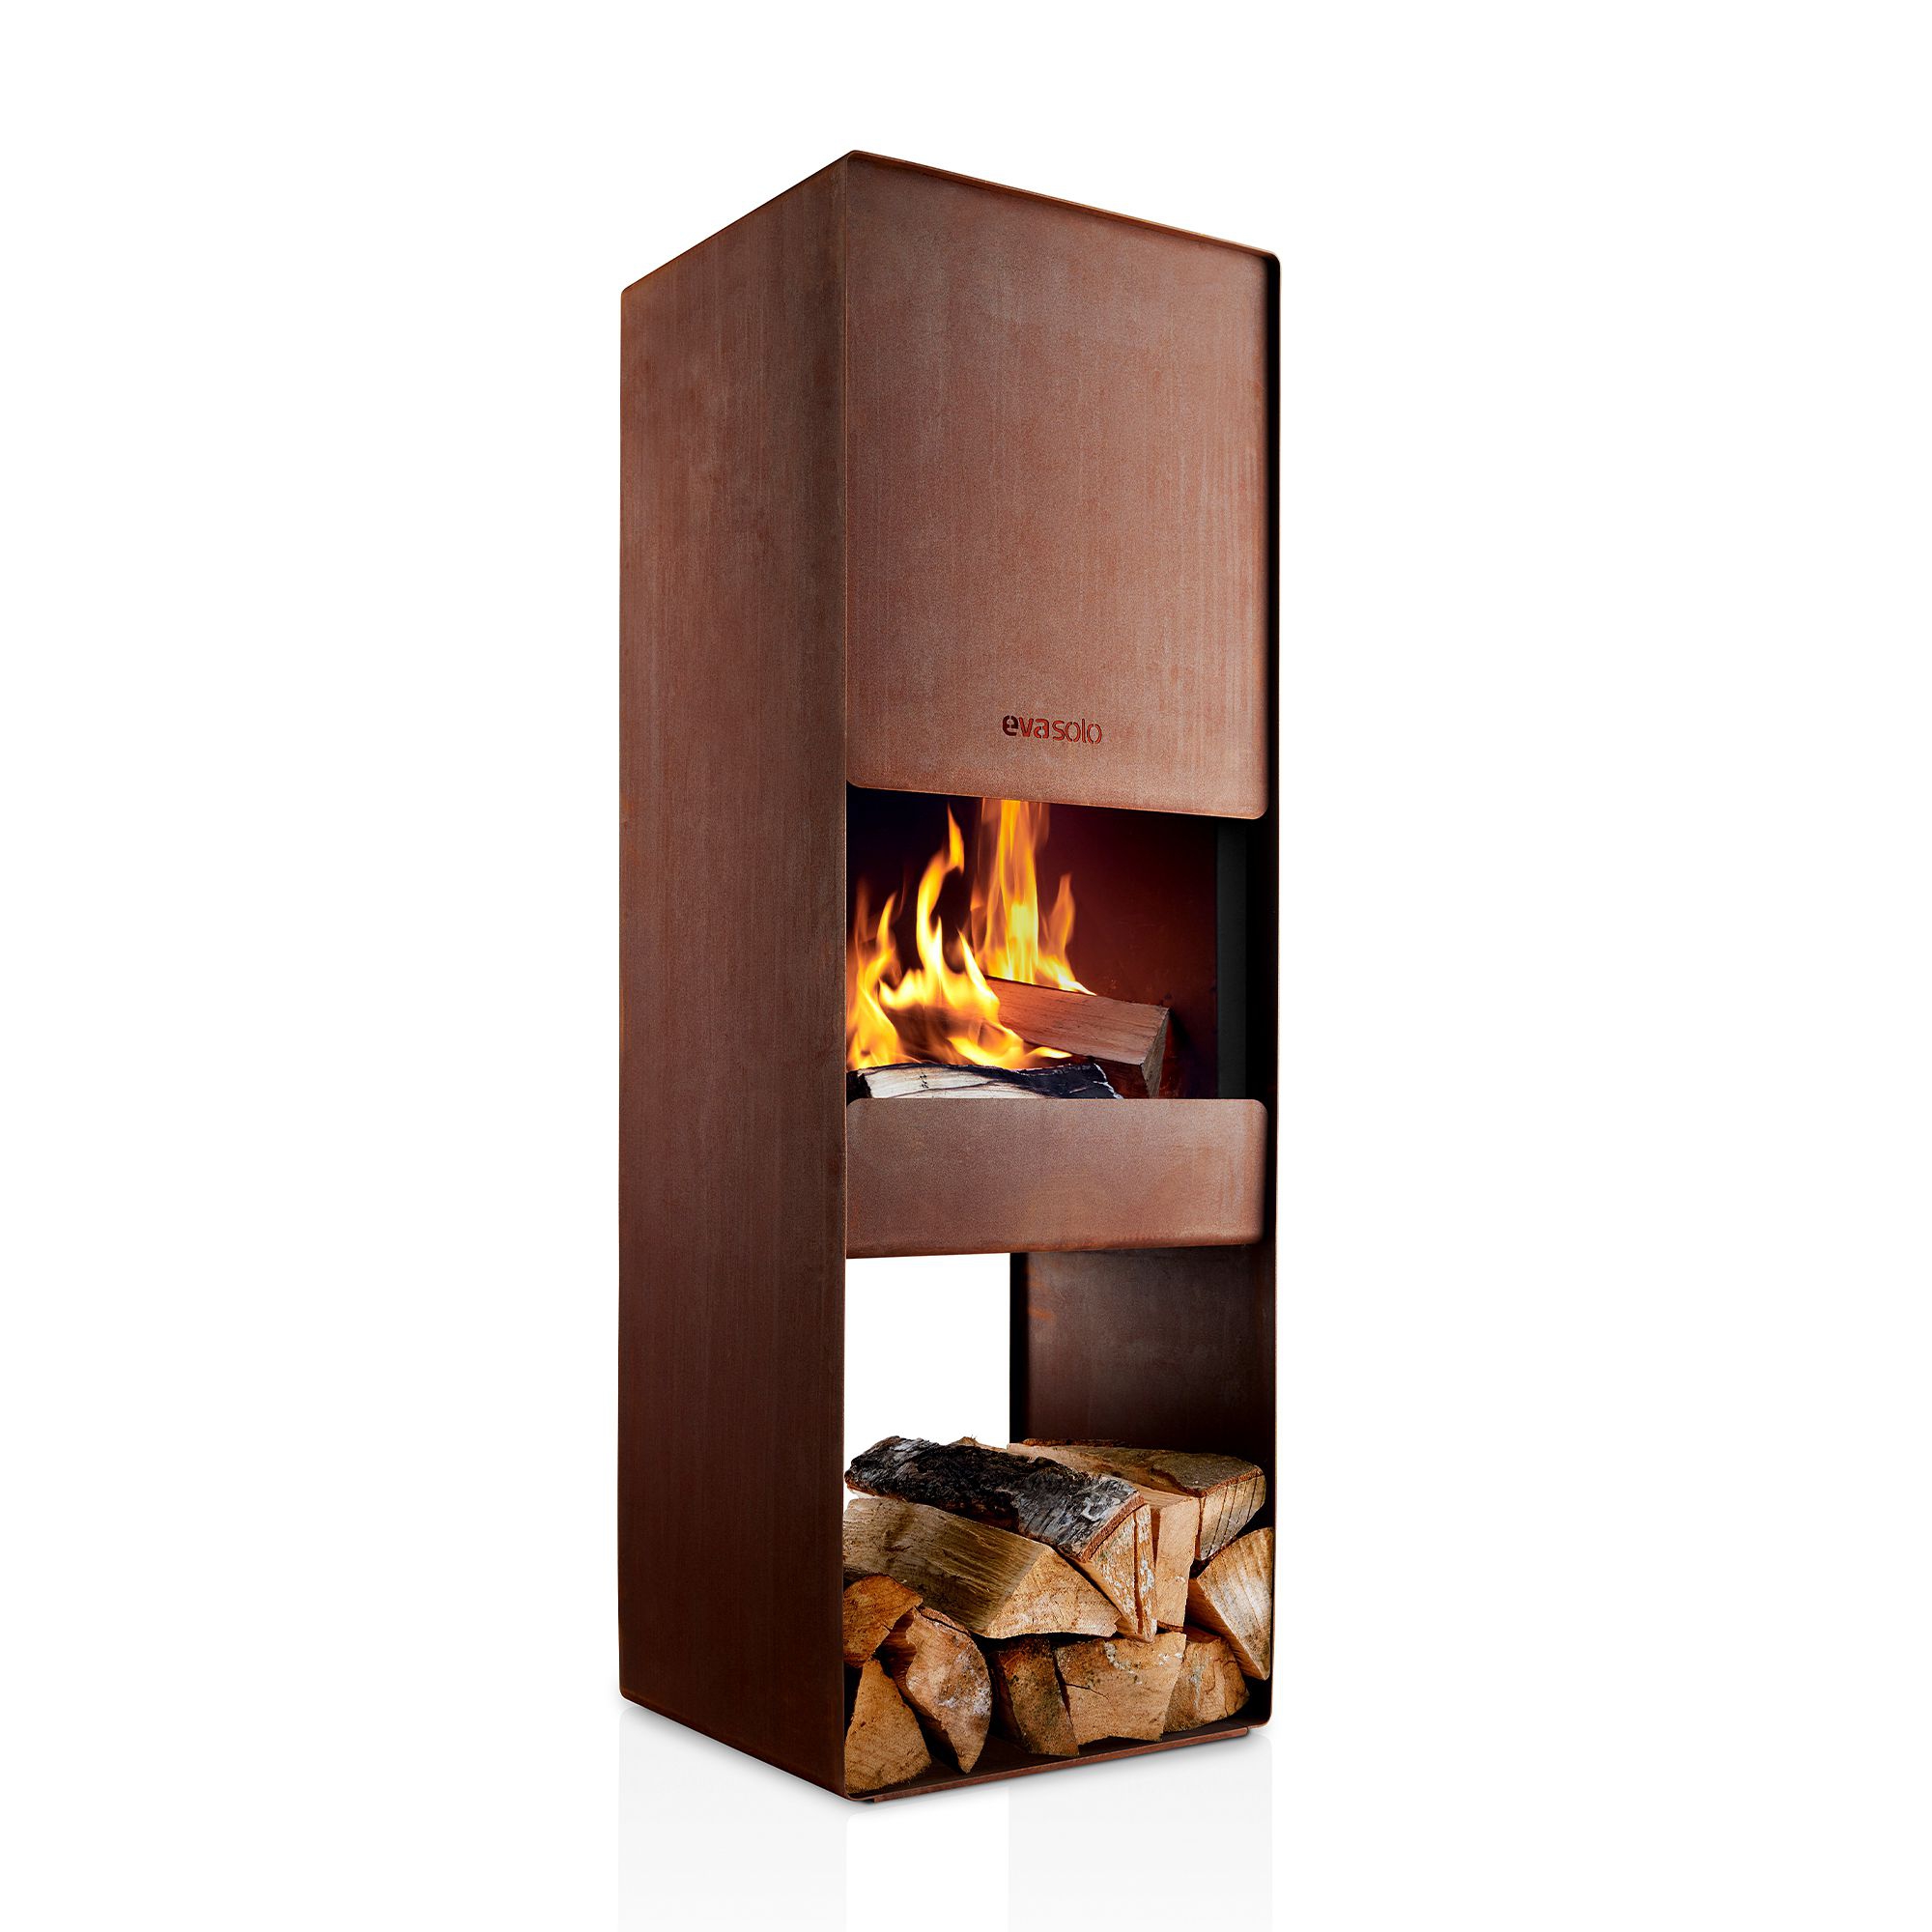 Eva Solo - FireBox garden wood burner